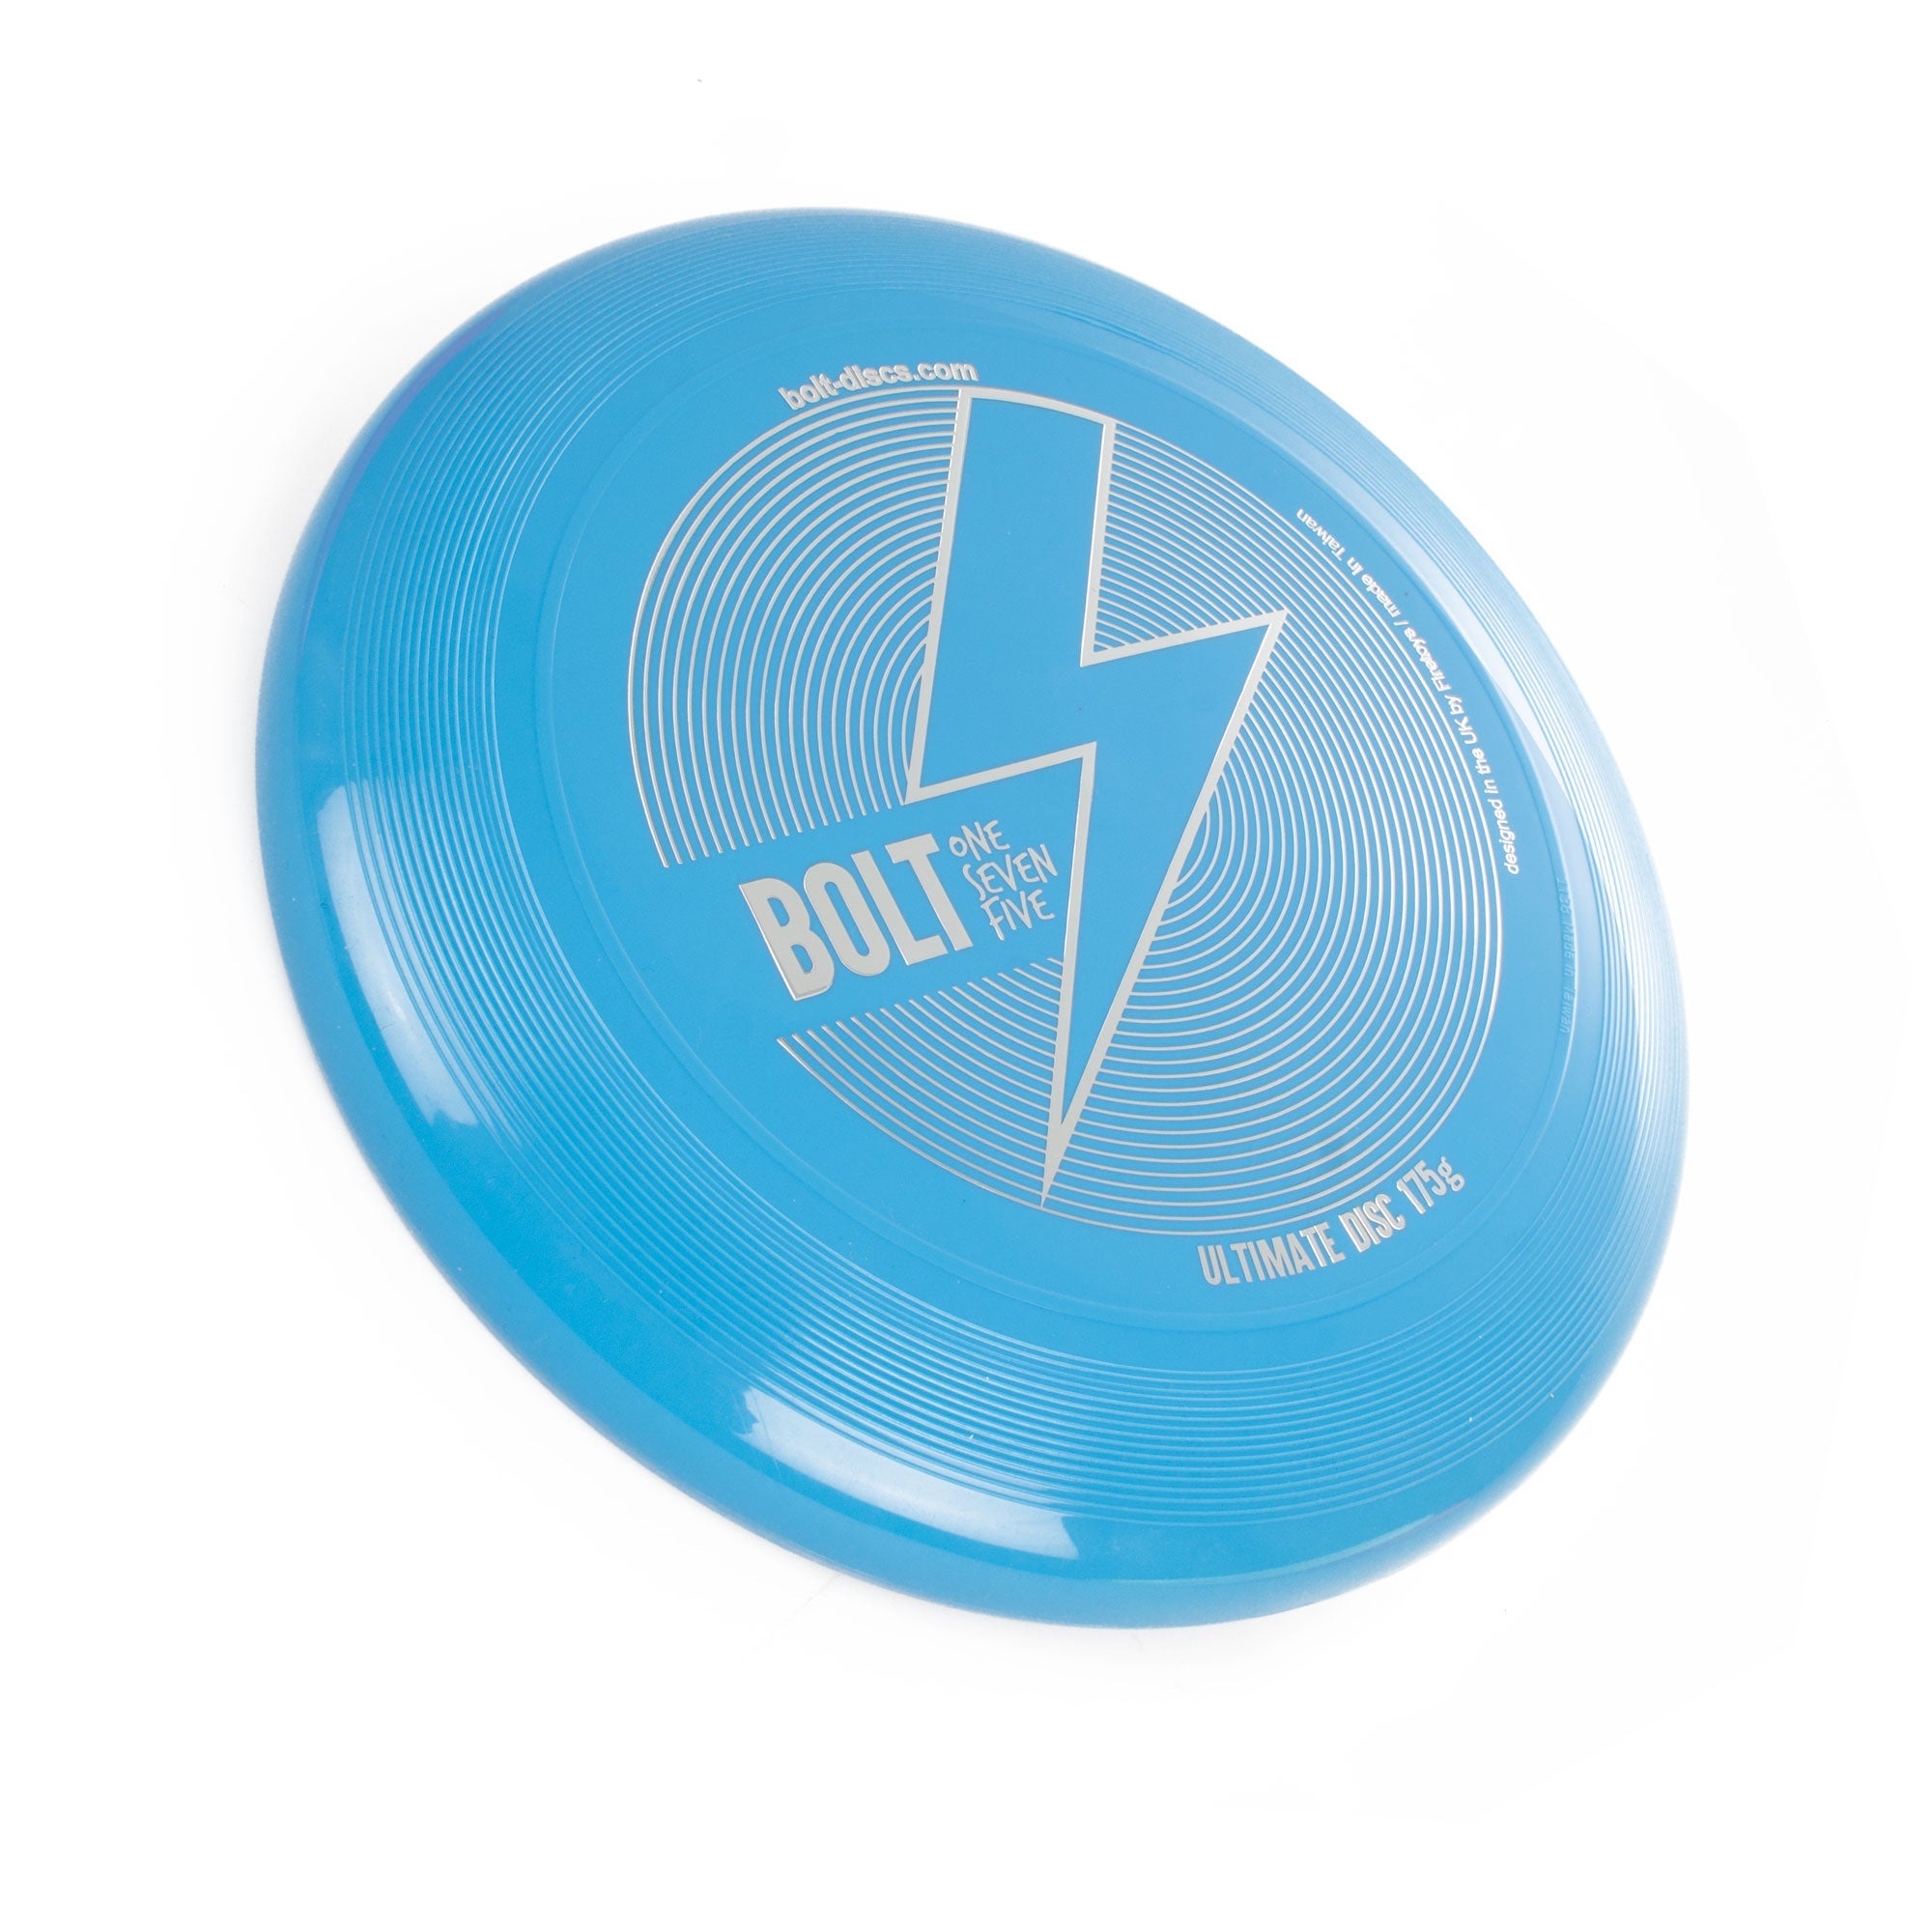 Blue BOLT frisbee at an angle